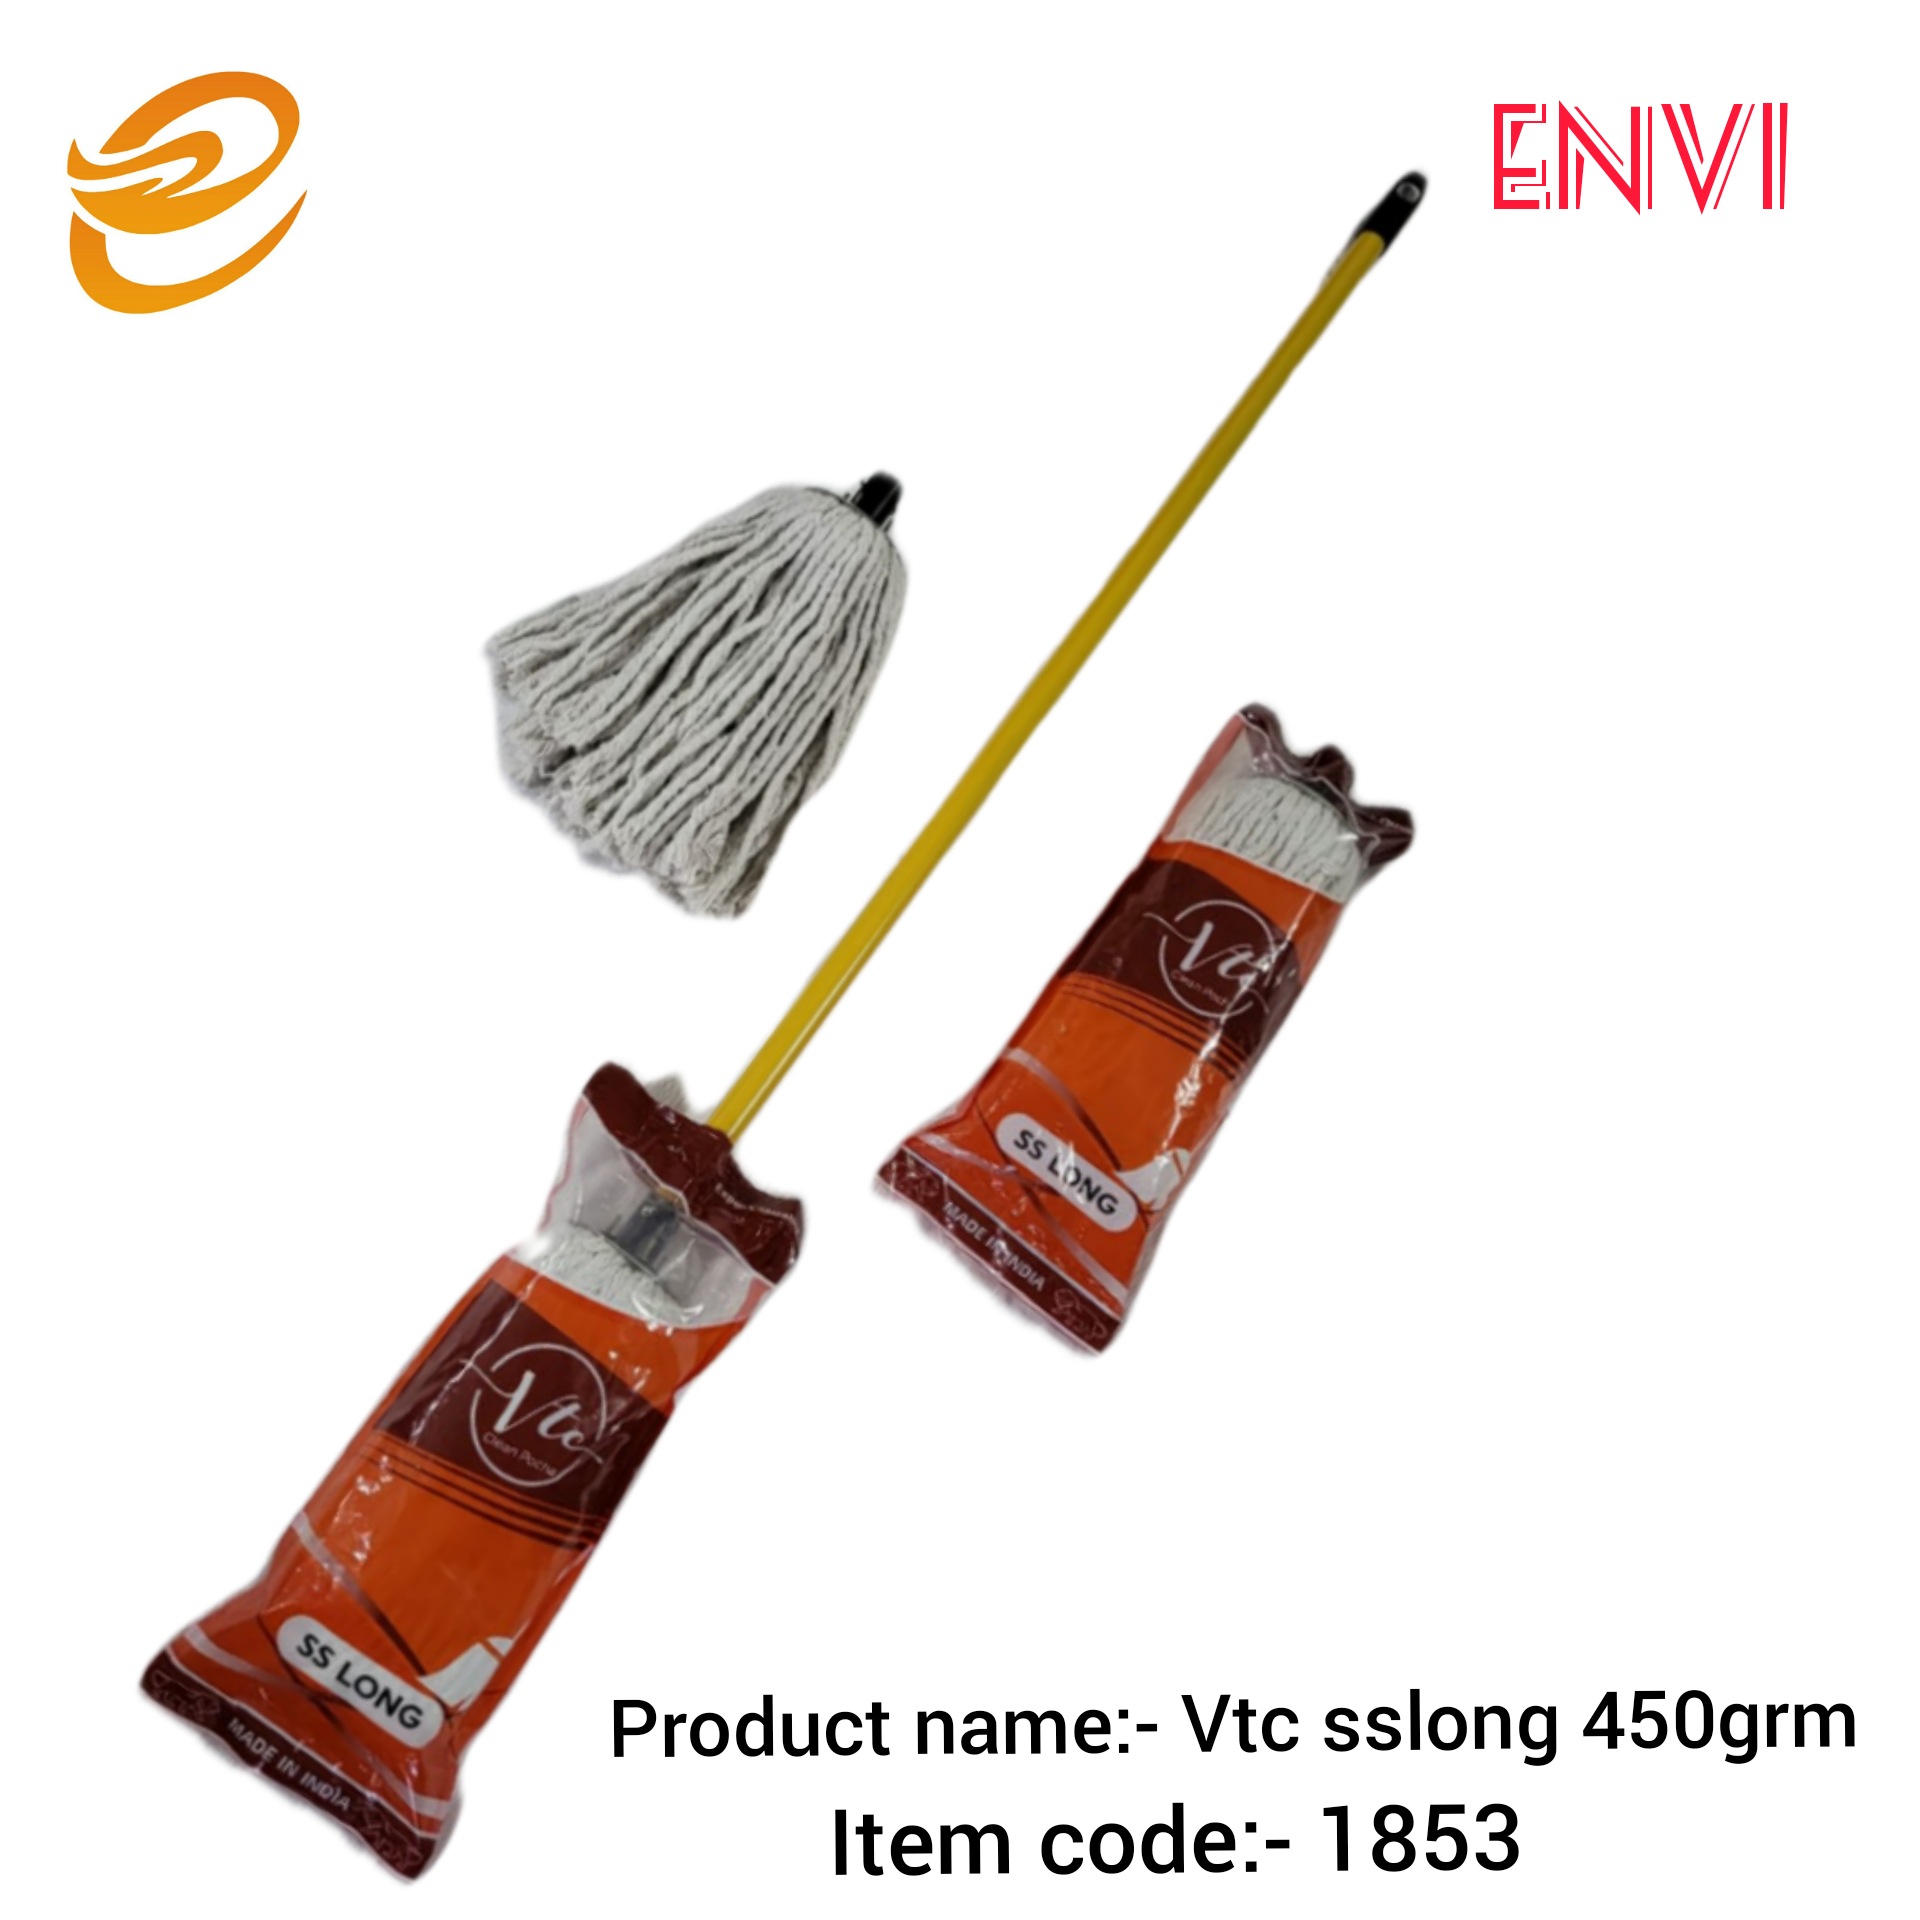 Envi SS Long Twist Microfiber Floor Cleaning Mop